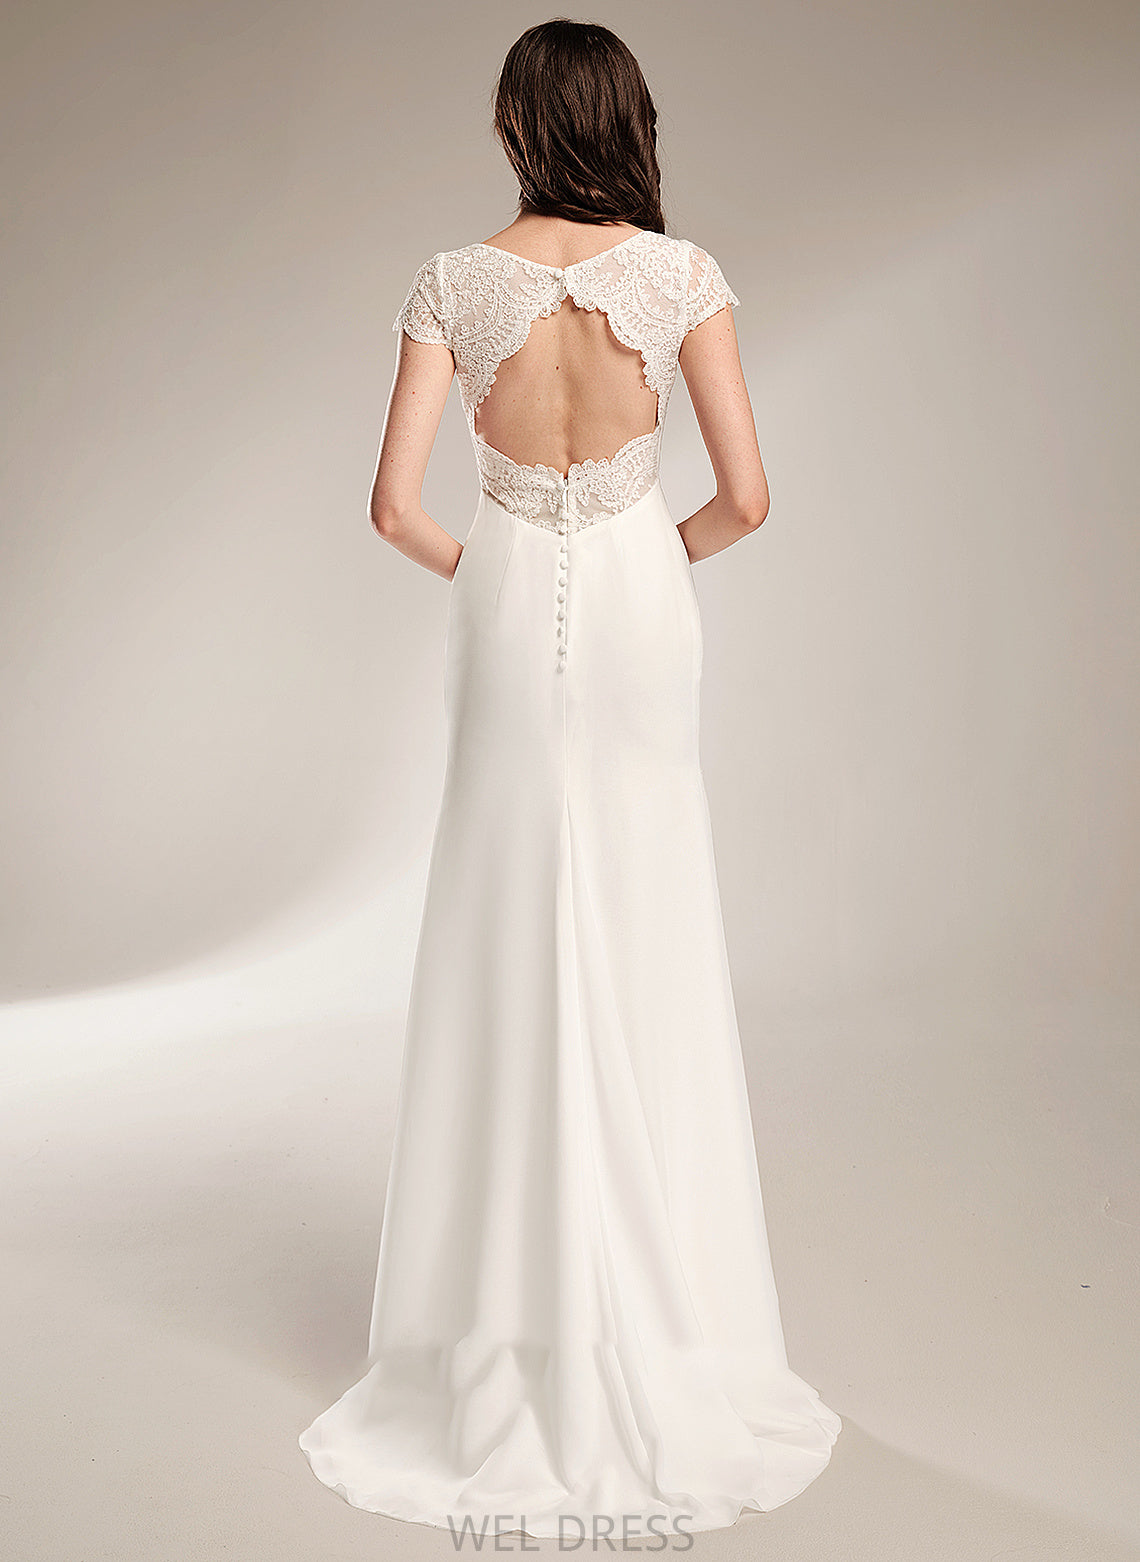 Lace Sheath/Column Dress With Jayda Sweep Wedding V-neck Wedding Dresses Train